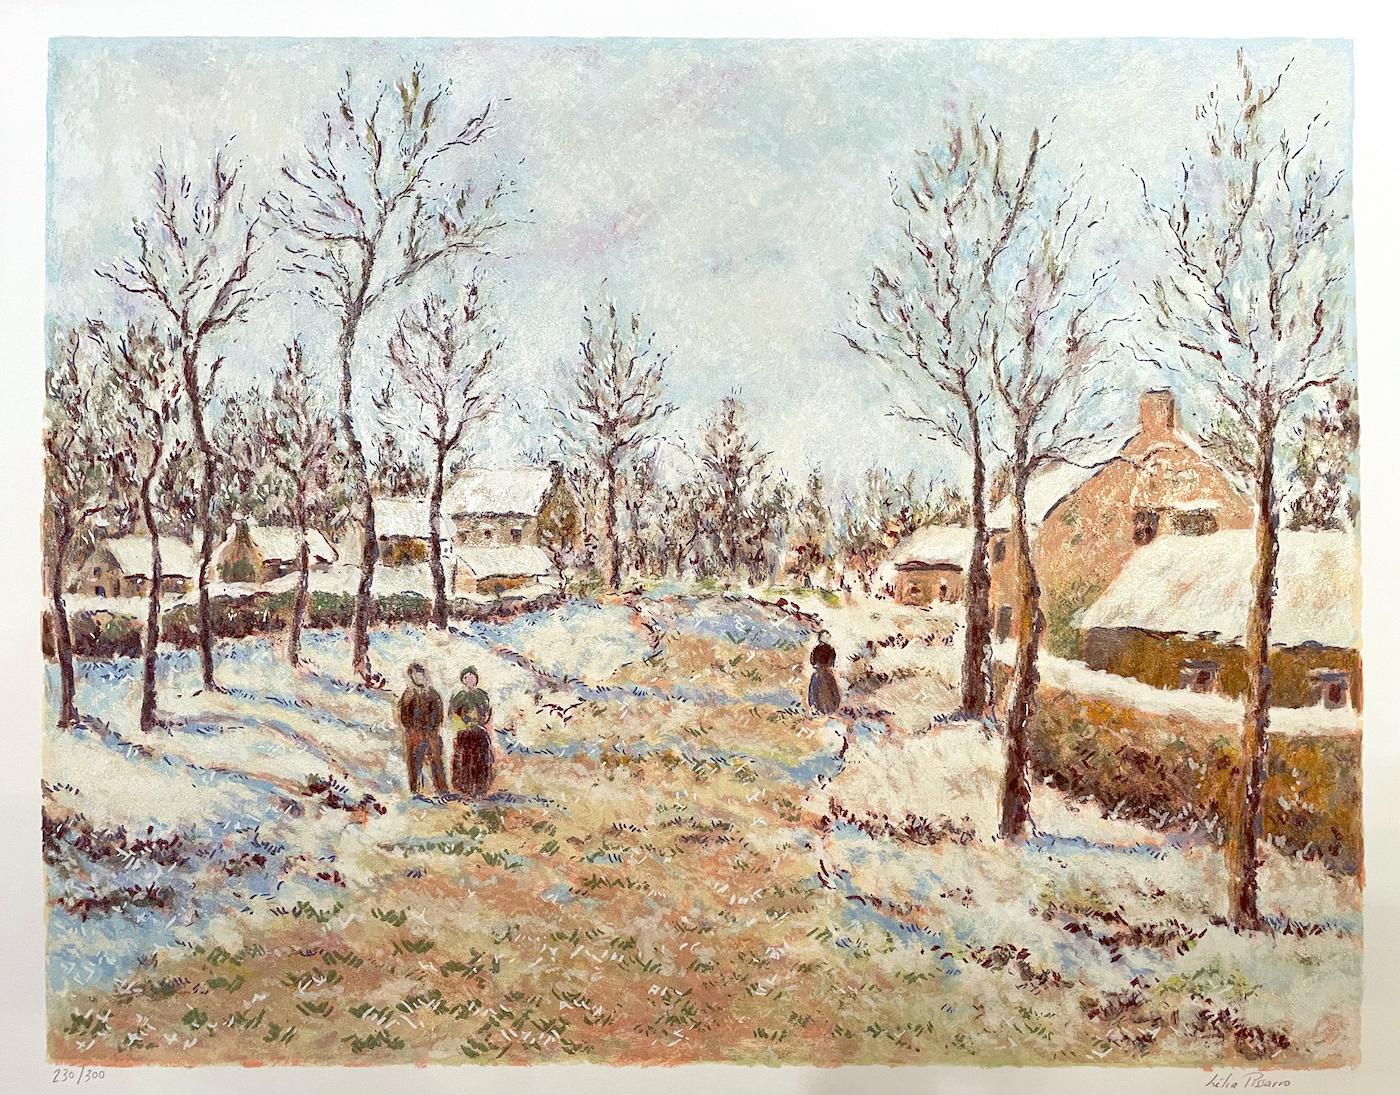 The Four Seasons - Winter by Lélia Pissarro - Serigraph - Print by Lelia Pissarro